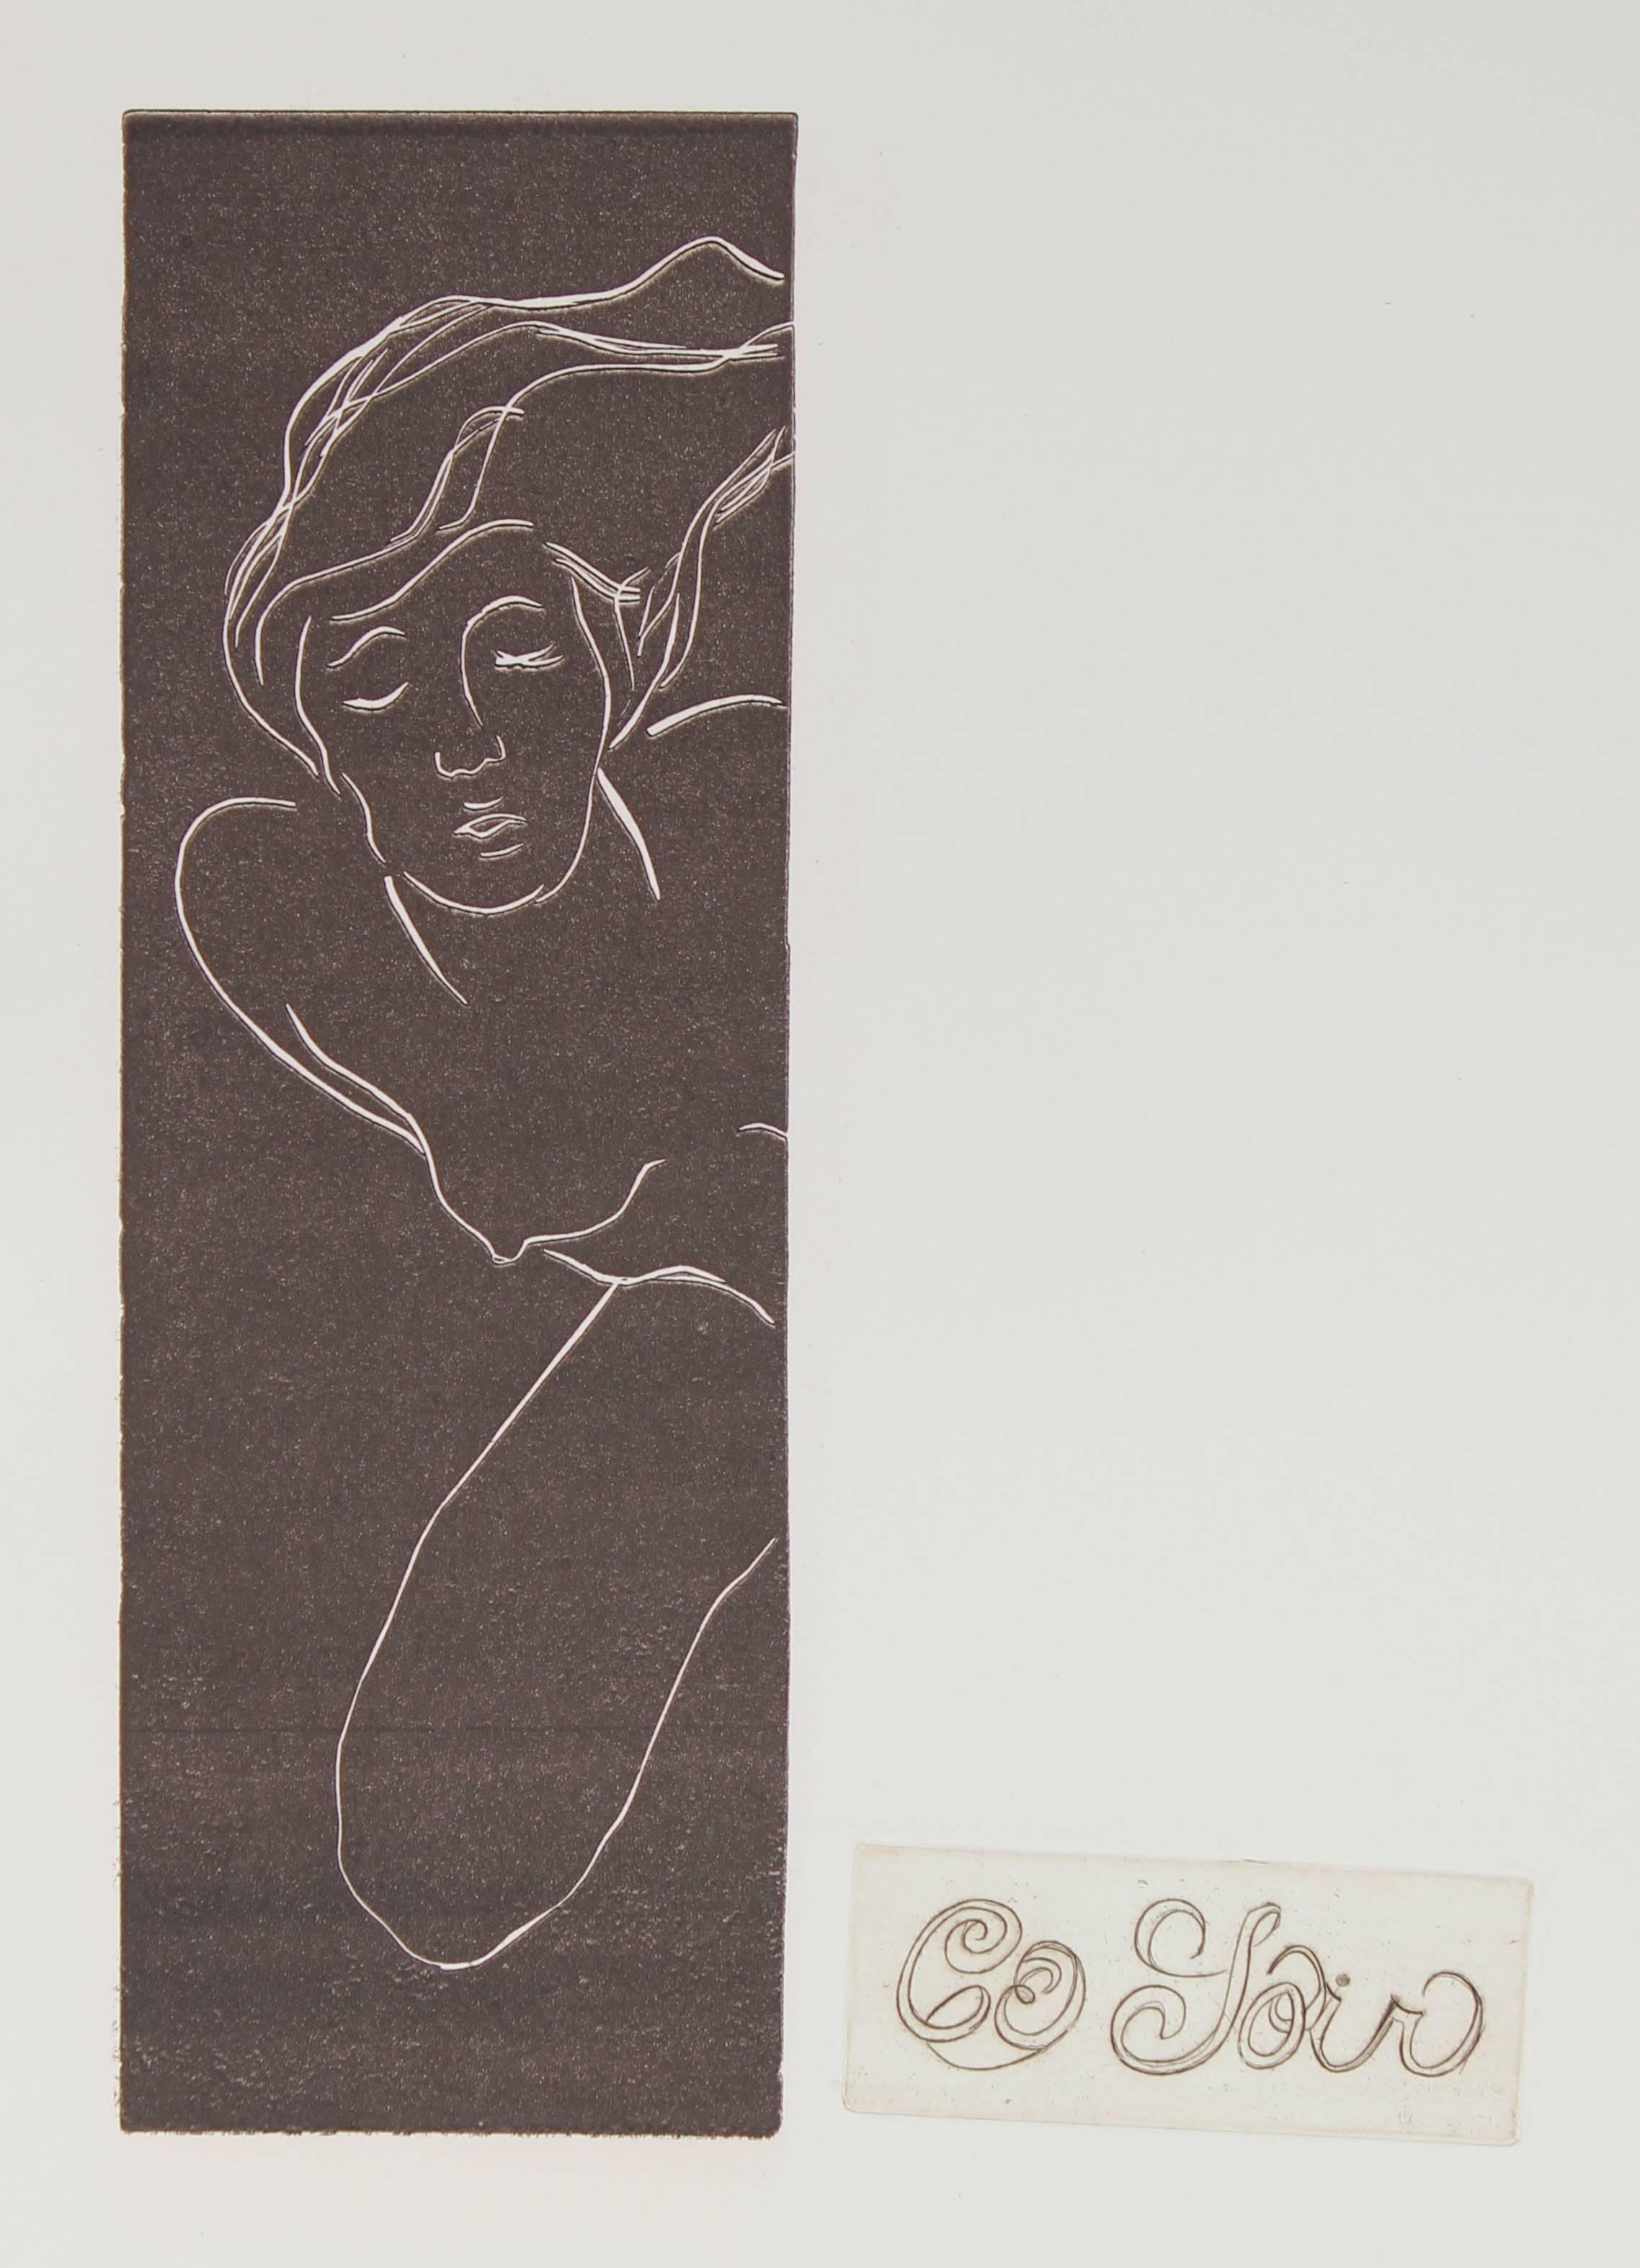 Howard Albert Figurative Print - "Ce Soir" Monochromatic Nude Etching, Circa 1960s